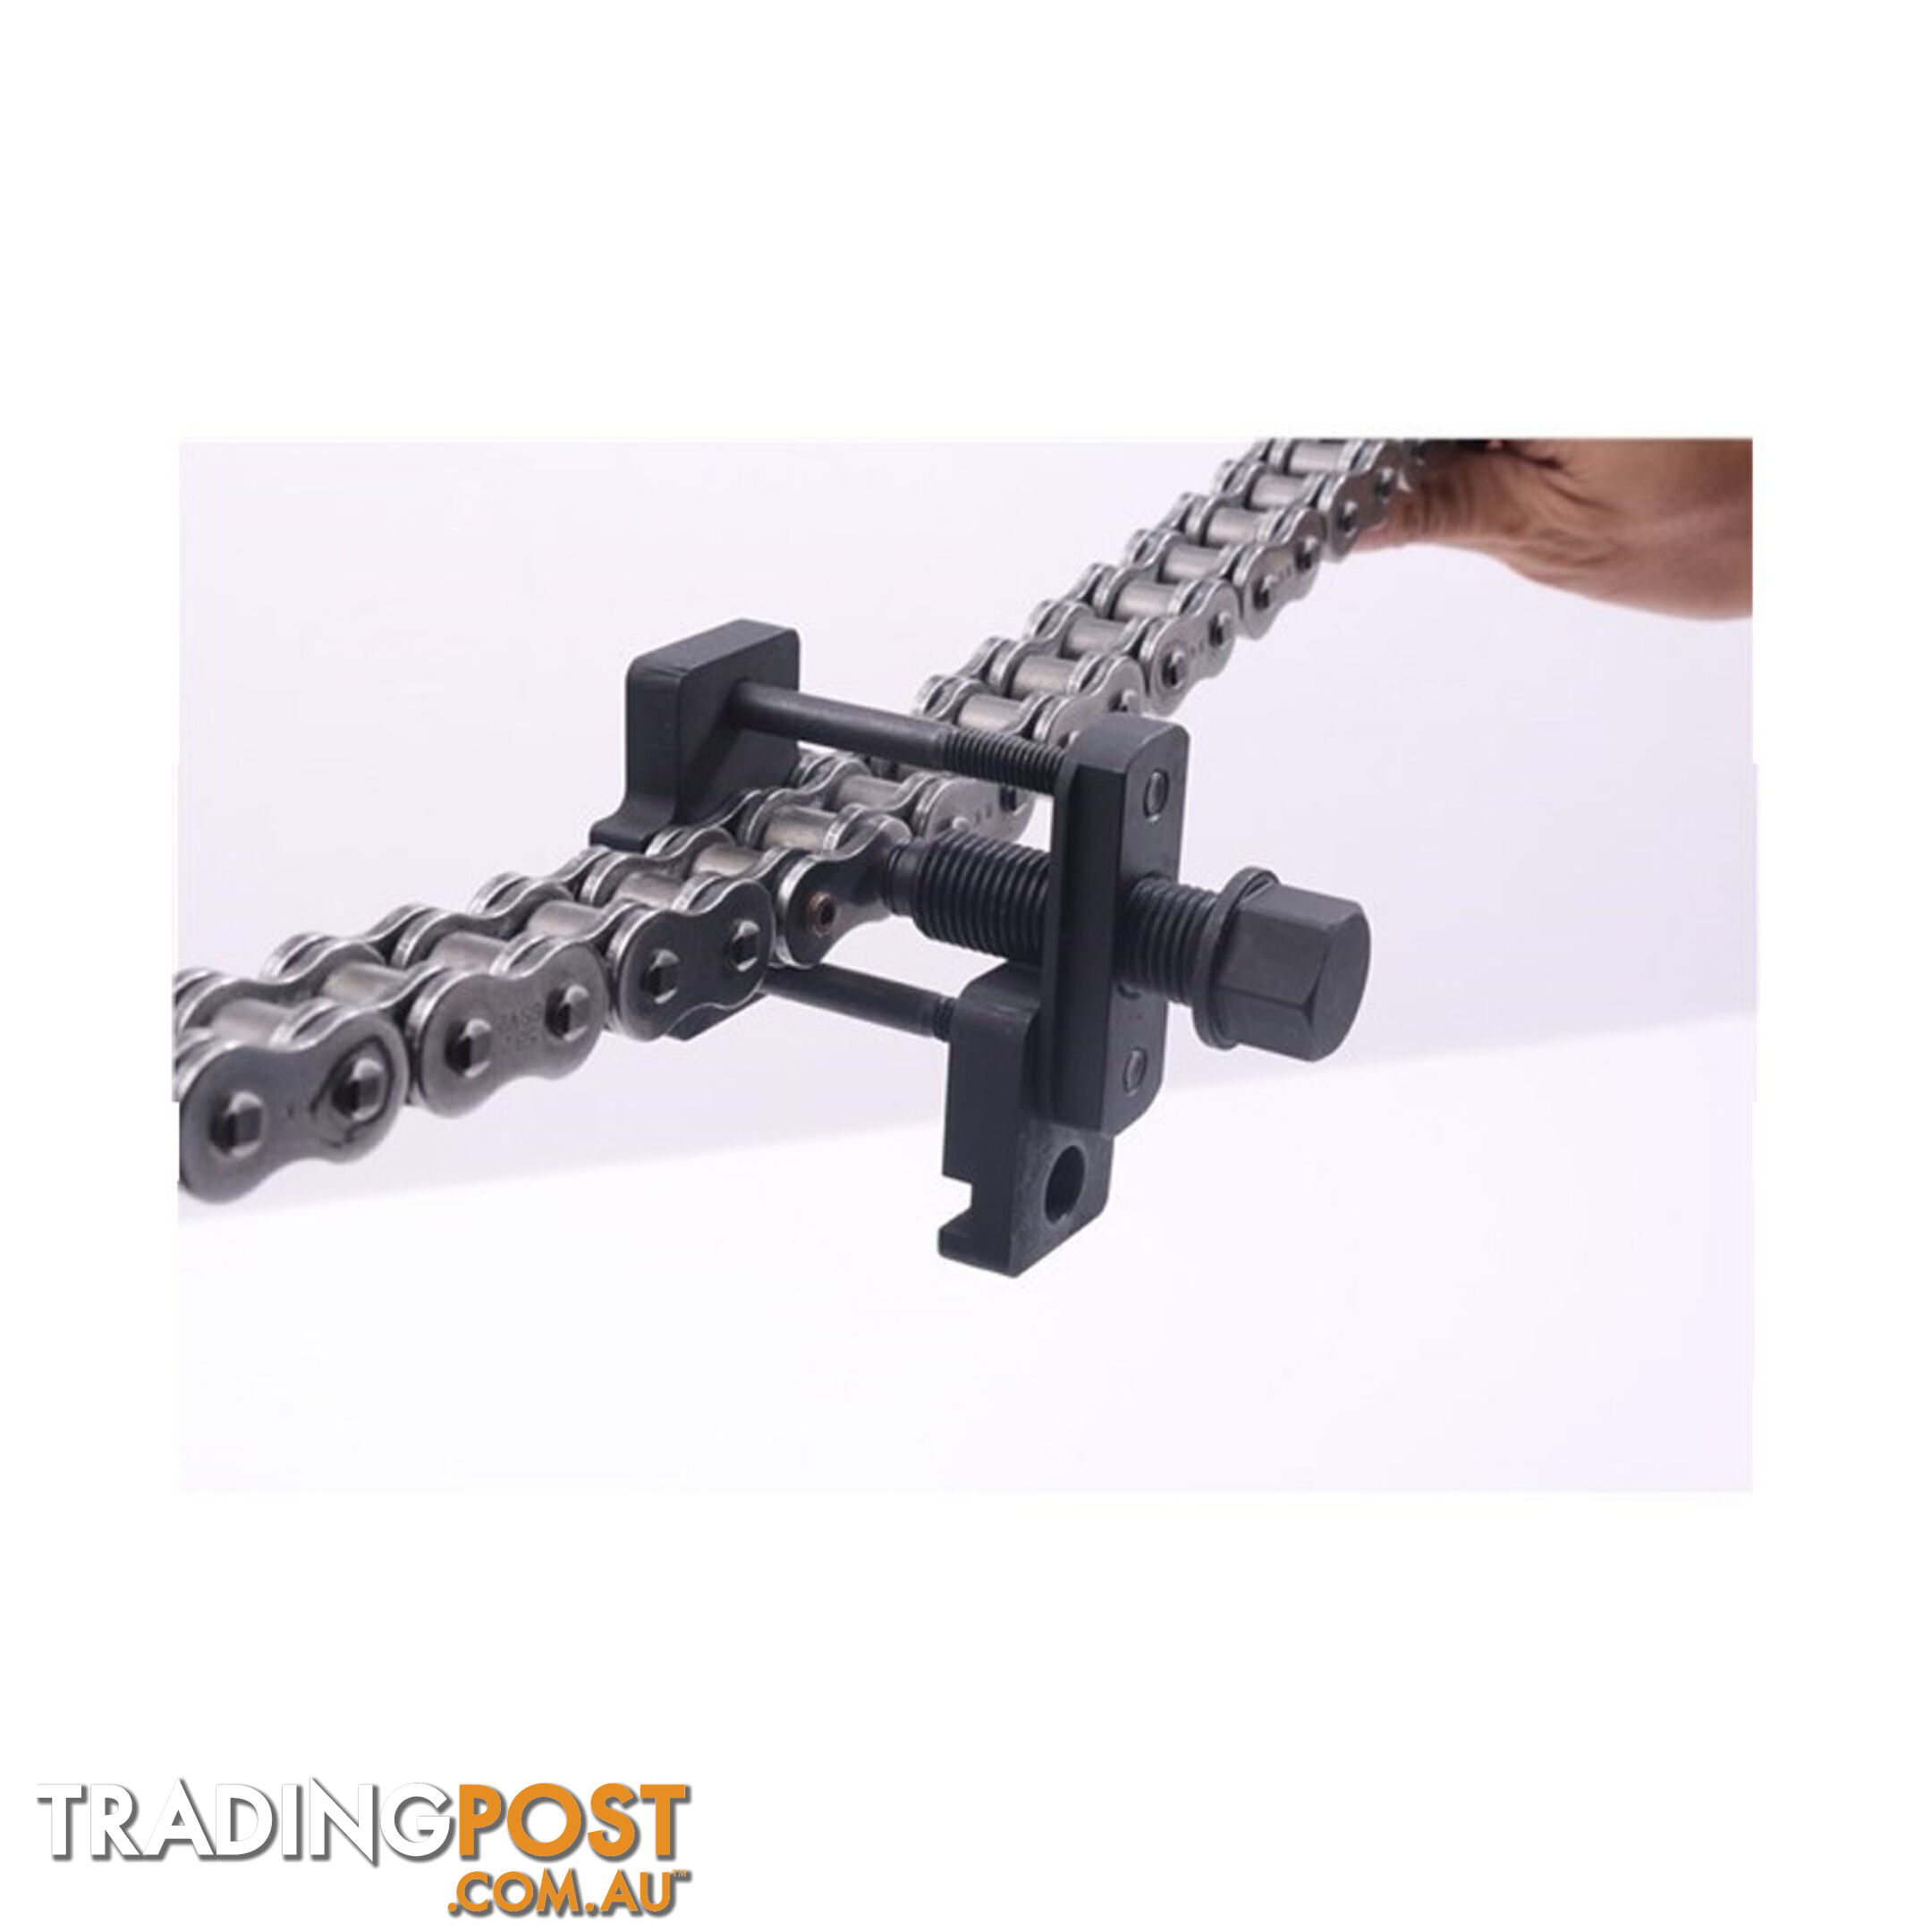 Bikeservice Chain Installation Press Tool SKU - BS70008